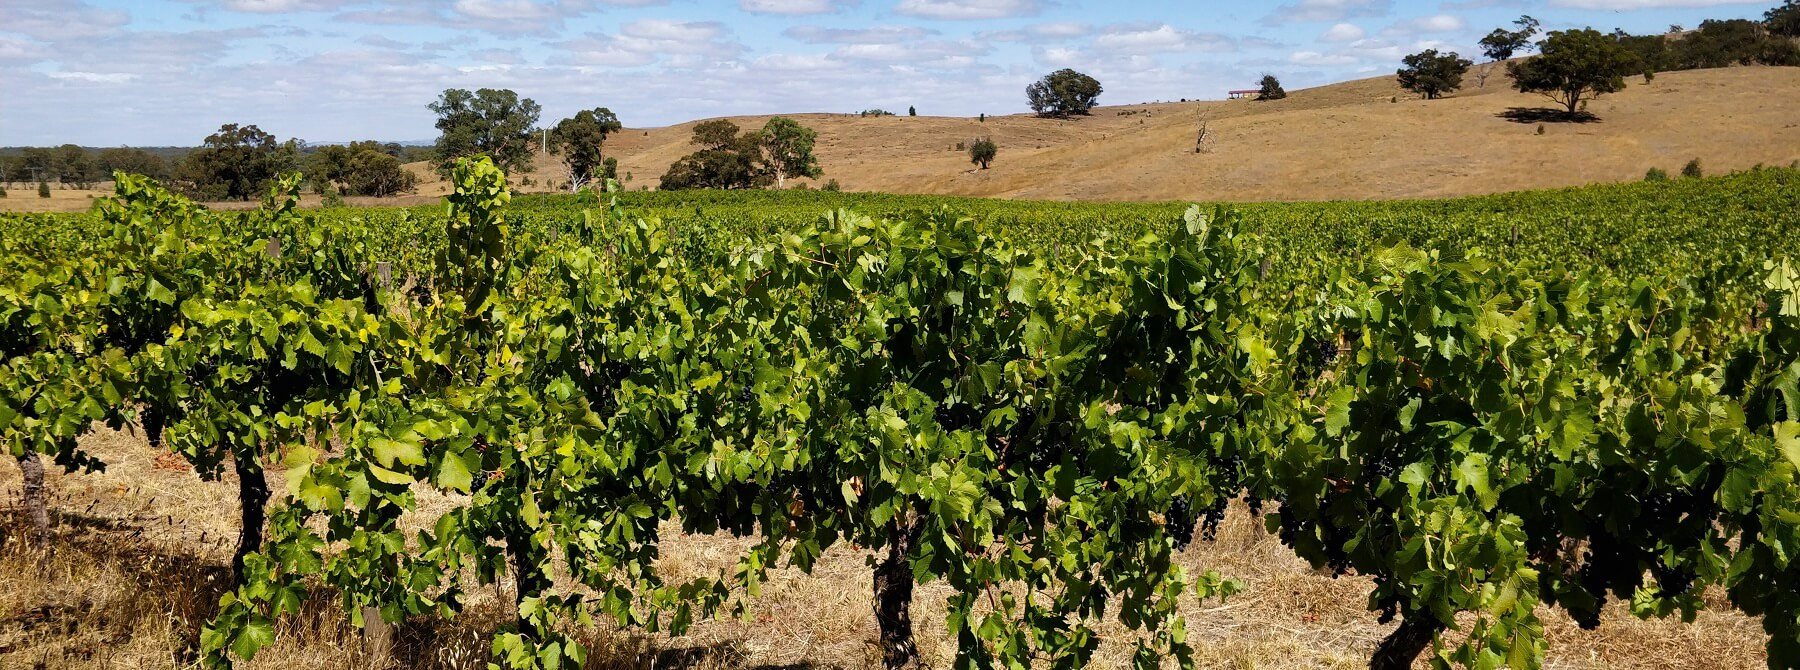 Australians wines : an amazing vintage 2019